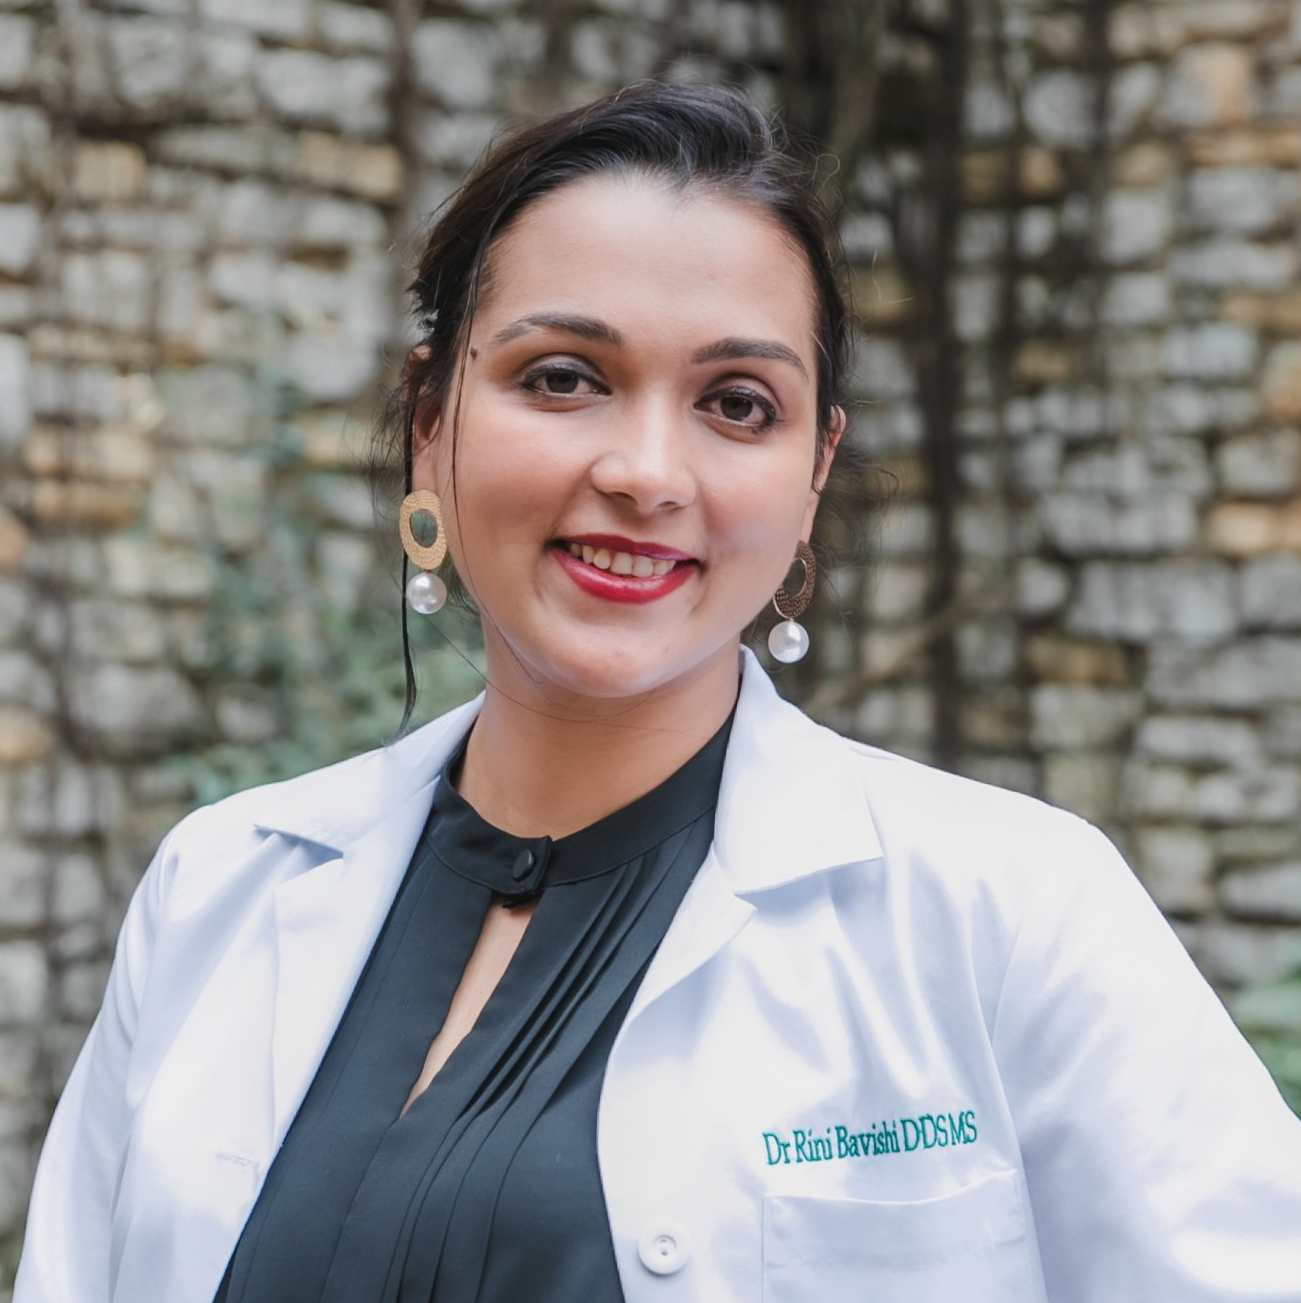 Meet Dr. Rini Bavishi, Leaf Smiles Dentist